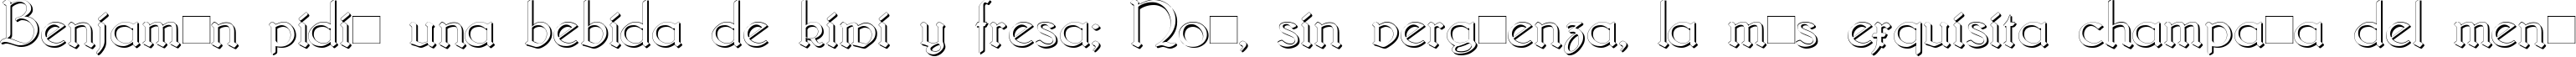 Пример написания шрифтом Bridgnorth-Shadow текста на испанском